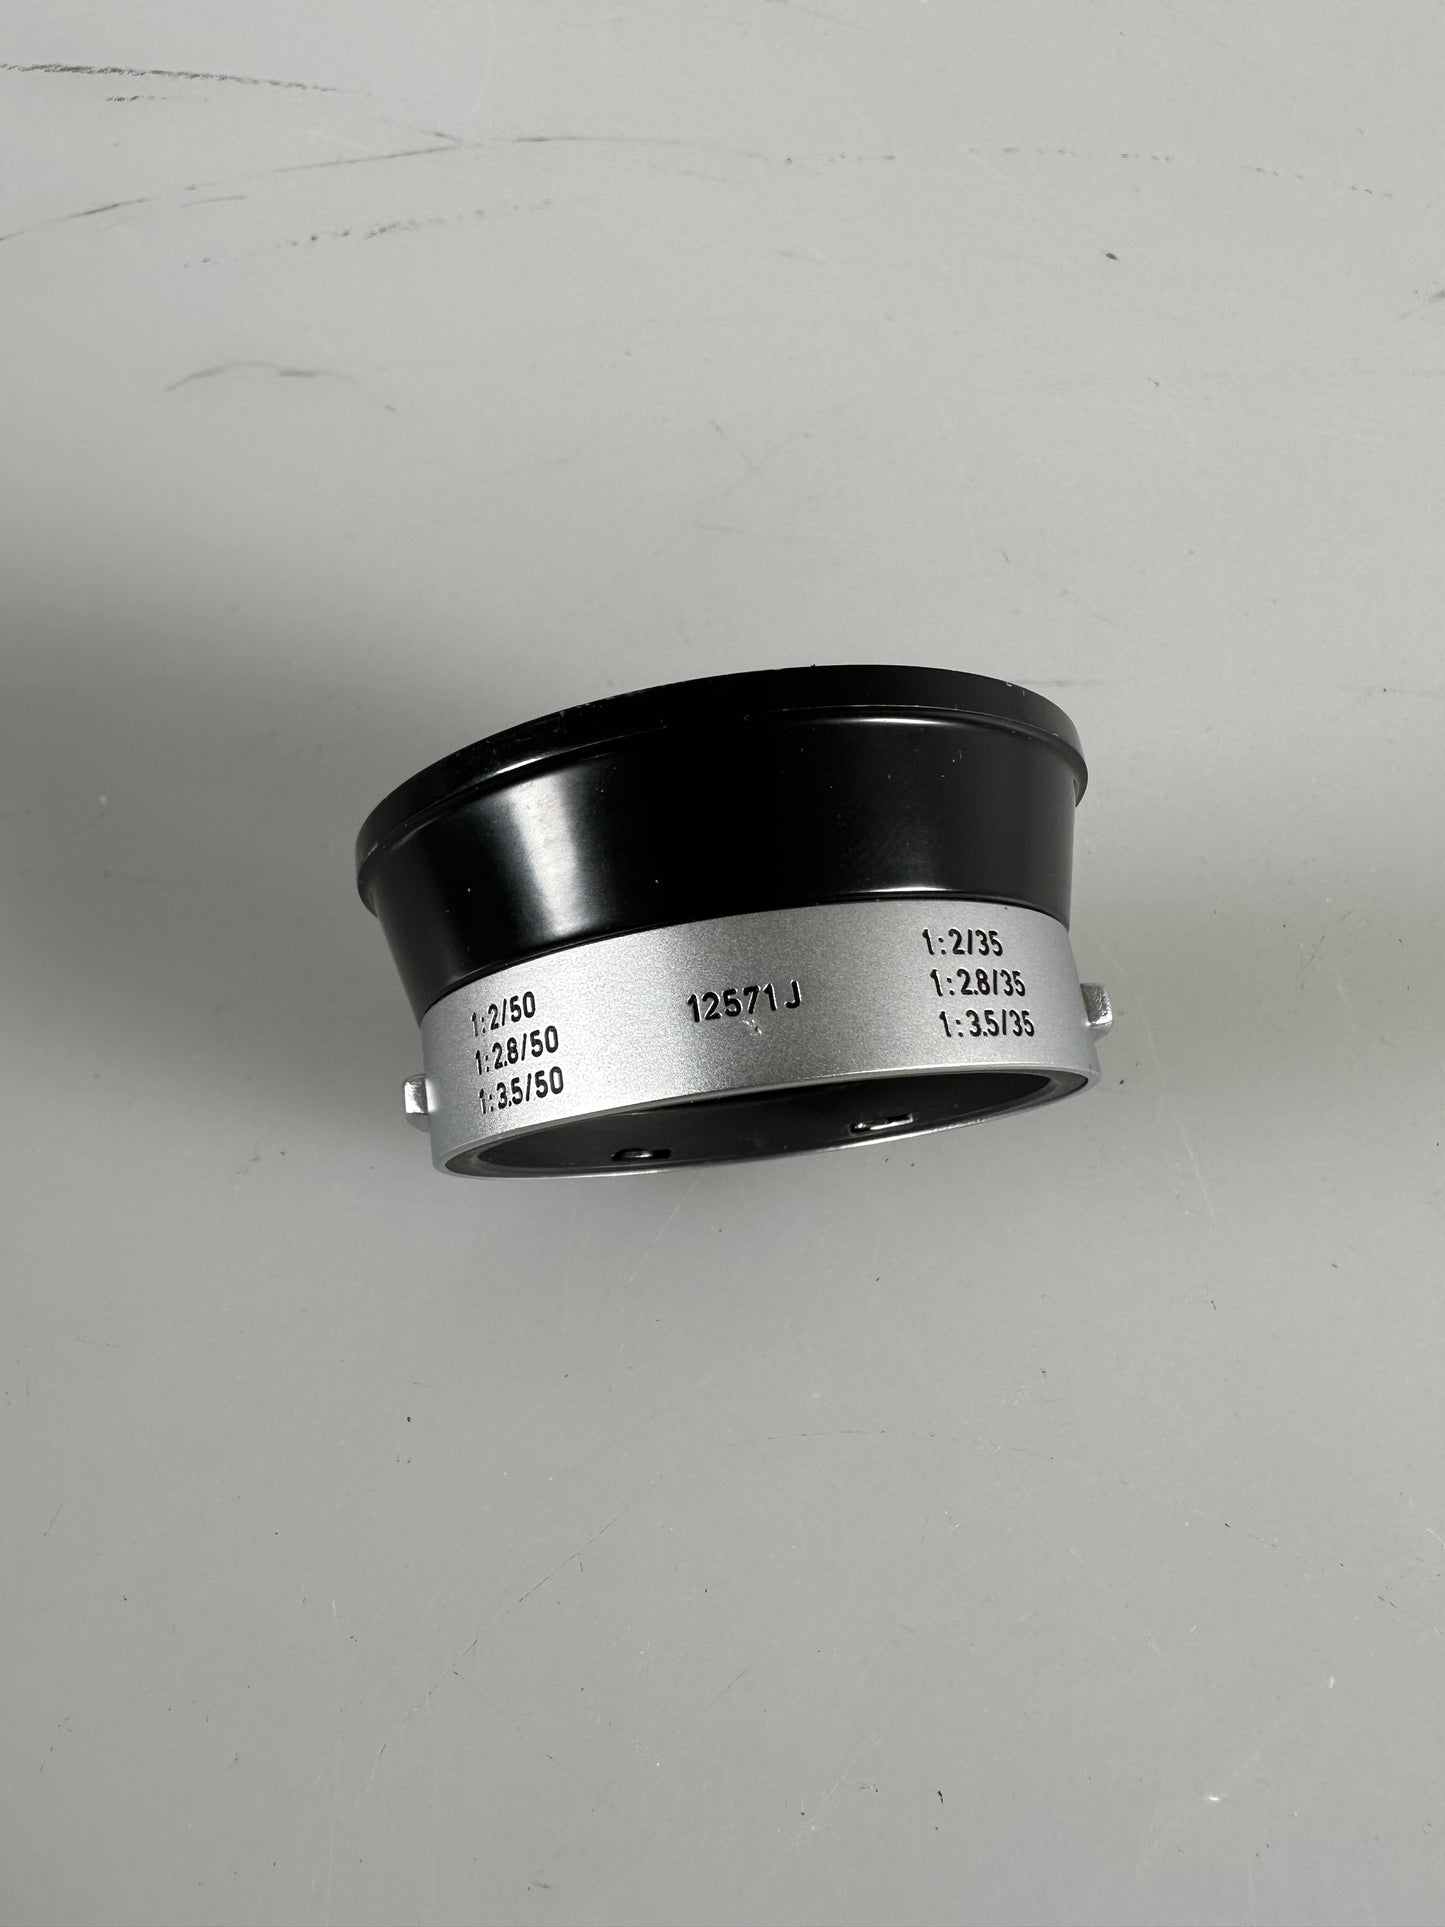 Leica IROOA 12571J Hood Shade for Summicron Summaron Elmarit Elmar Lens